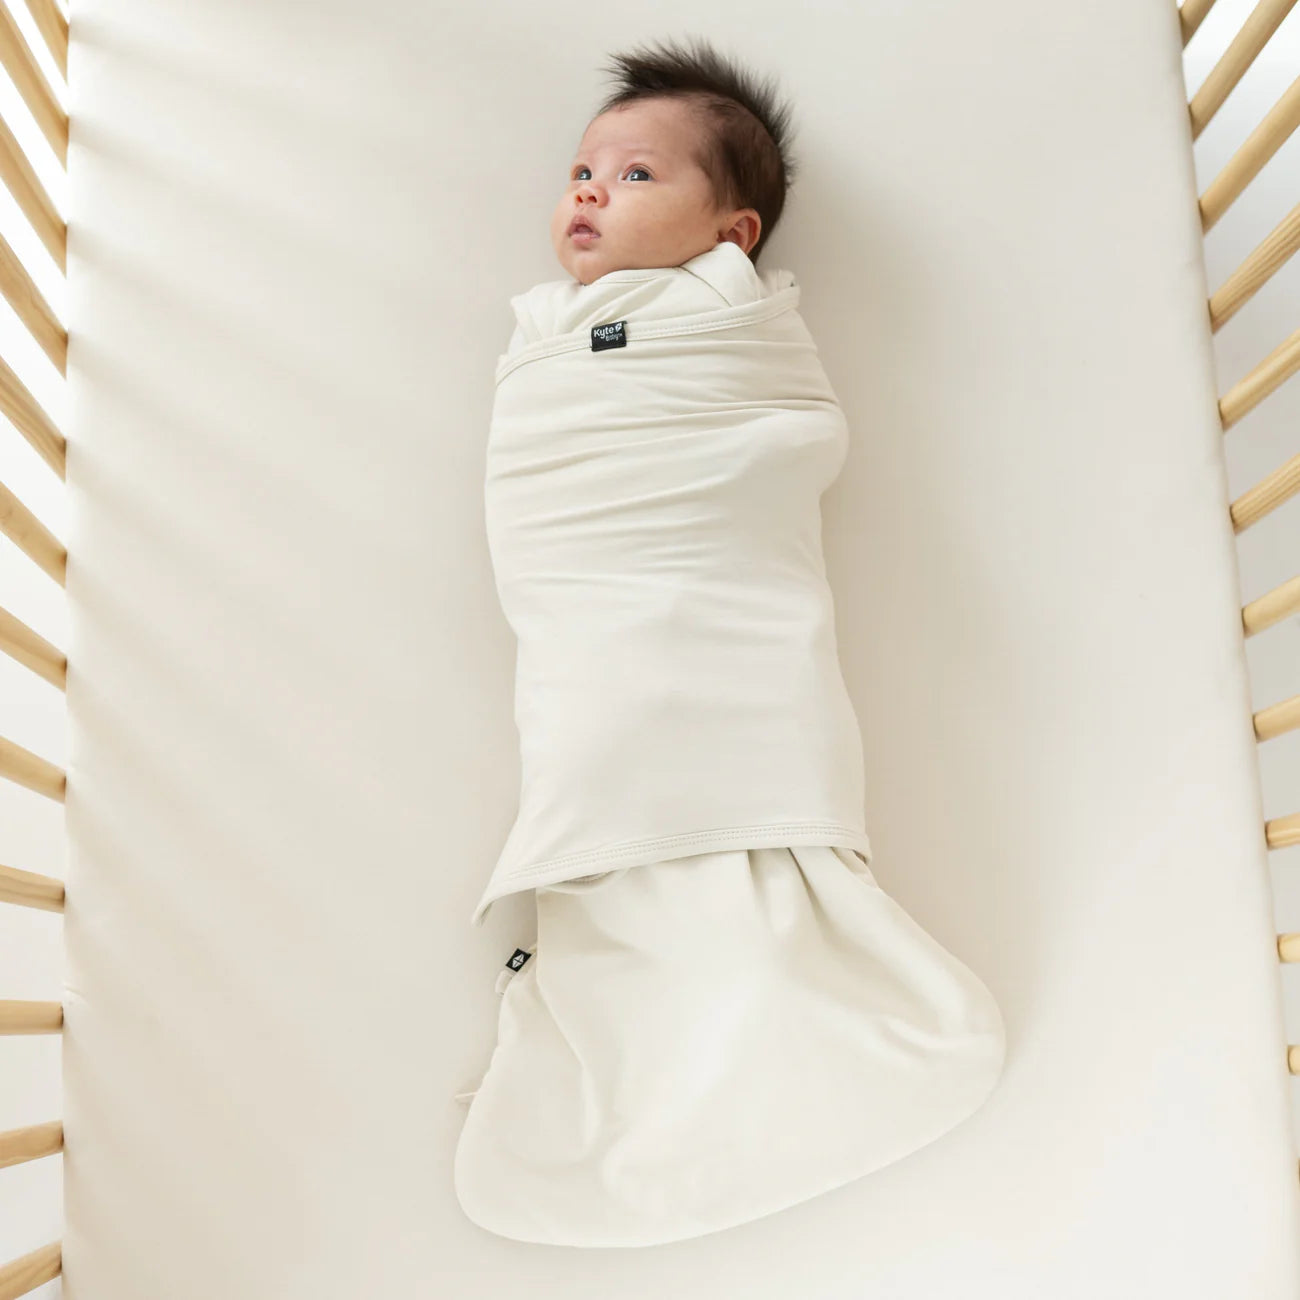 Baby Bed & Bath Items